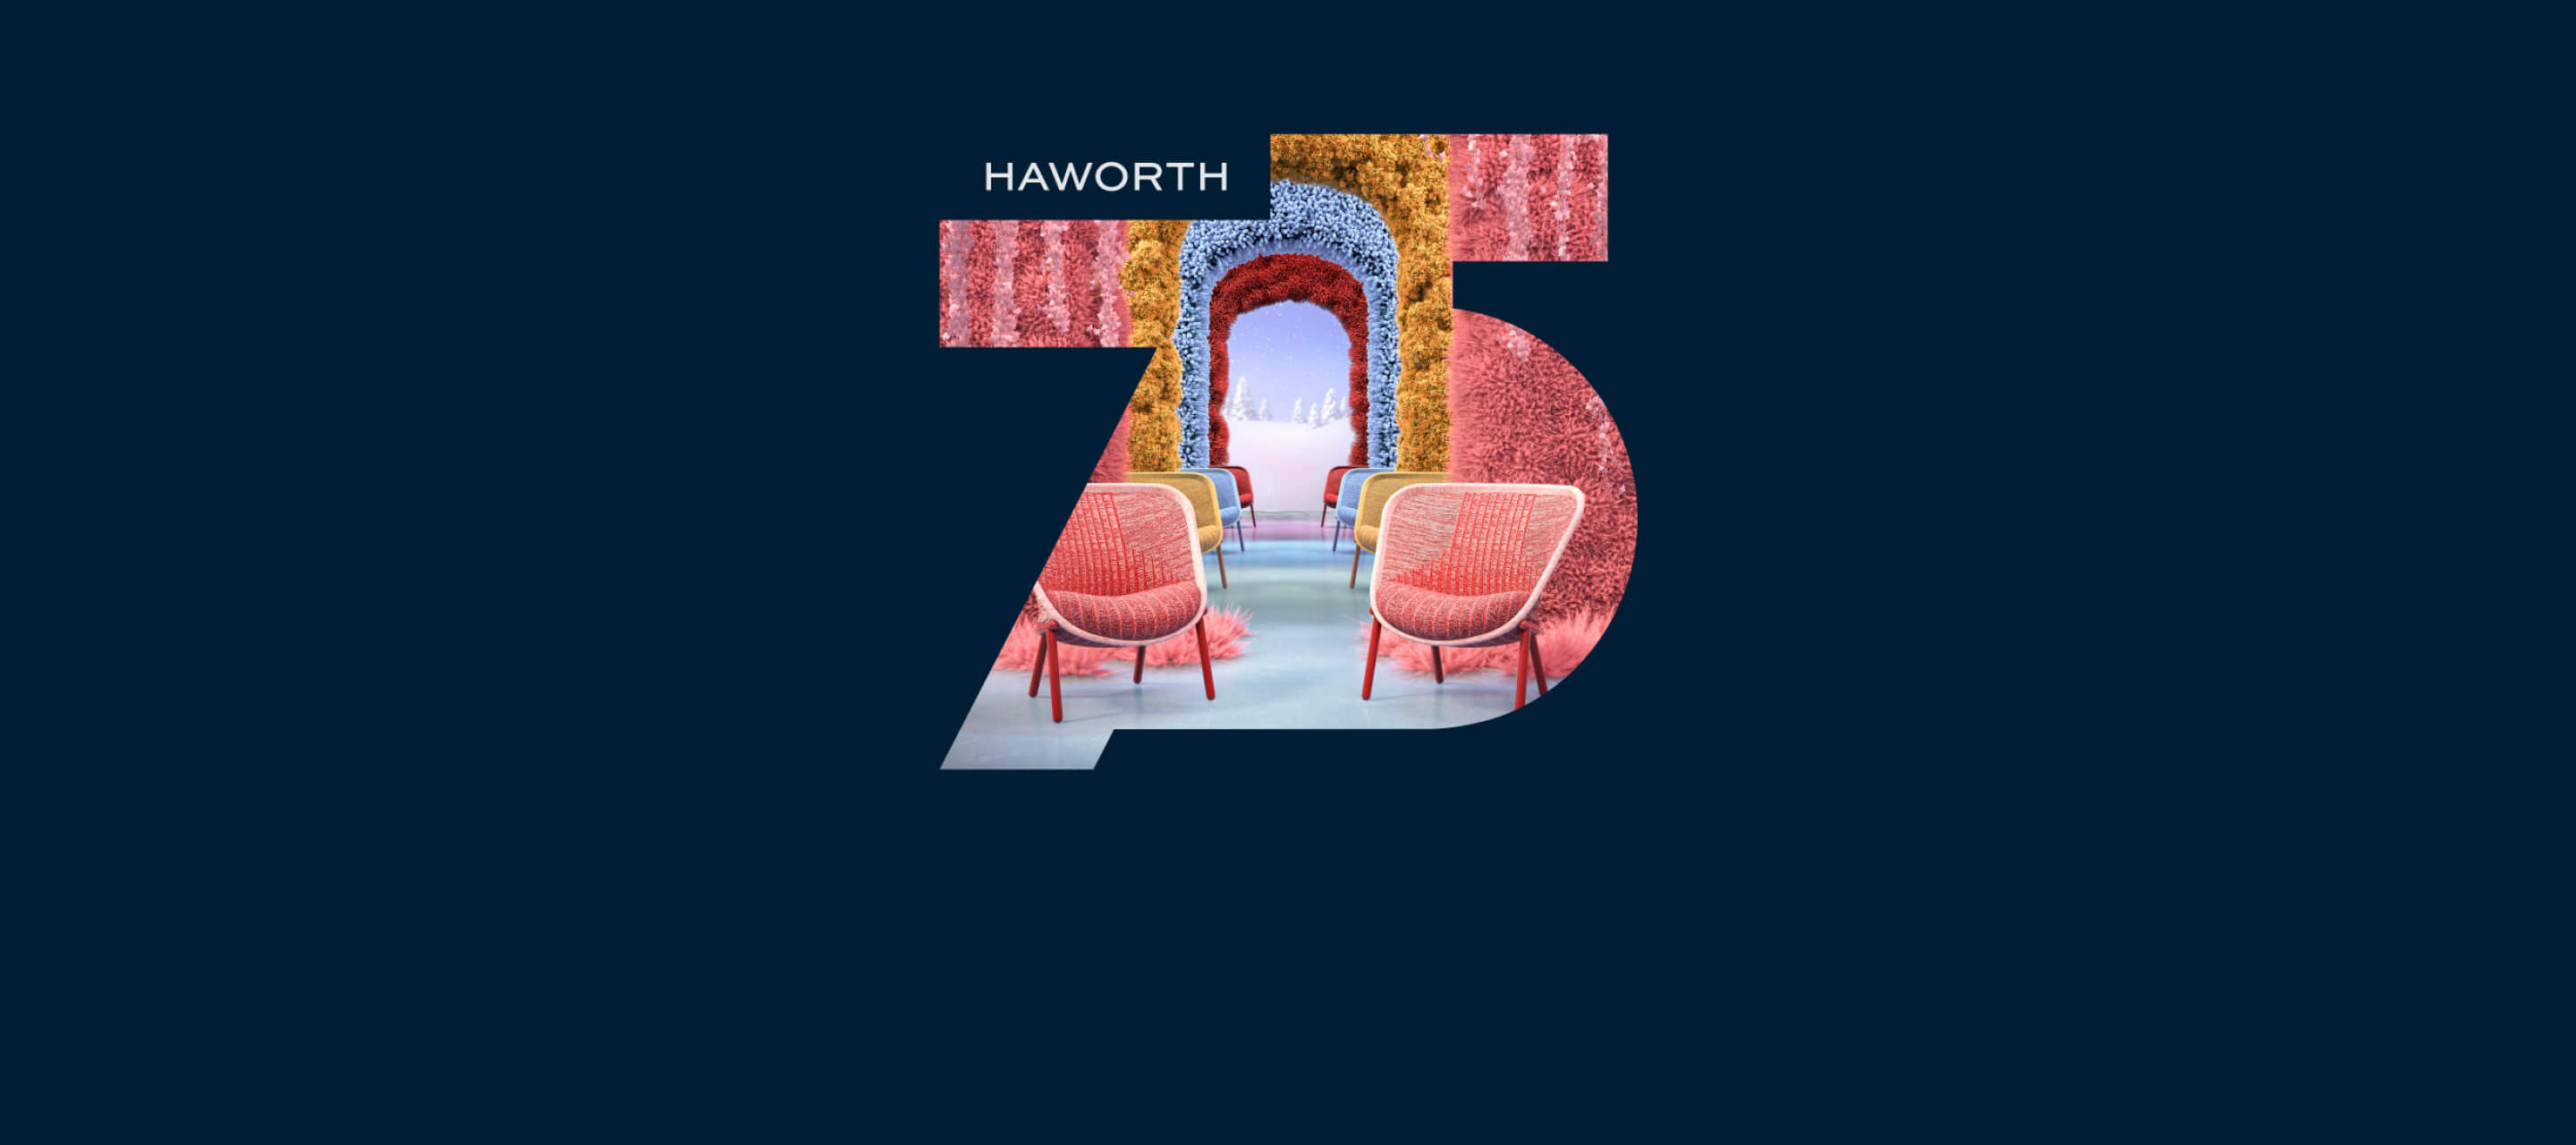 Haworth at Neocon celebrating their 75 years